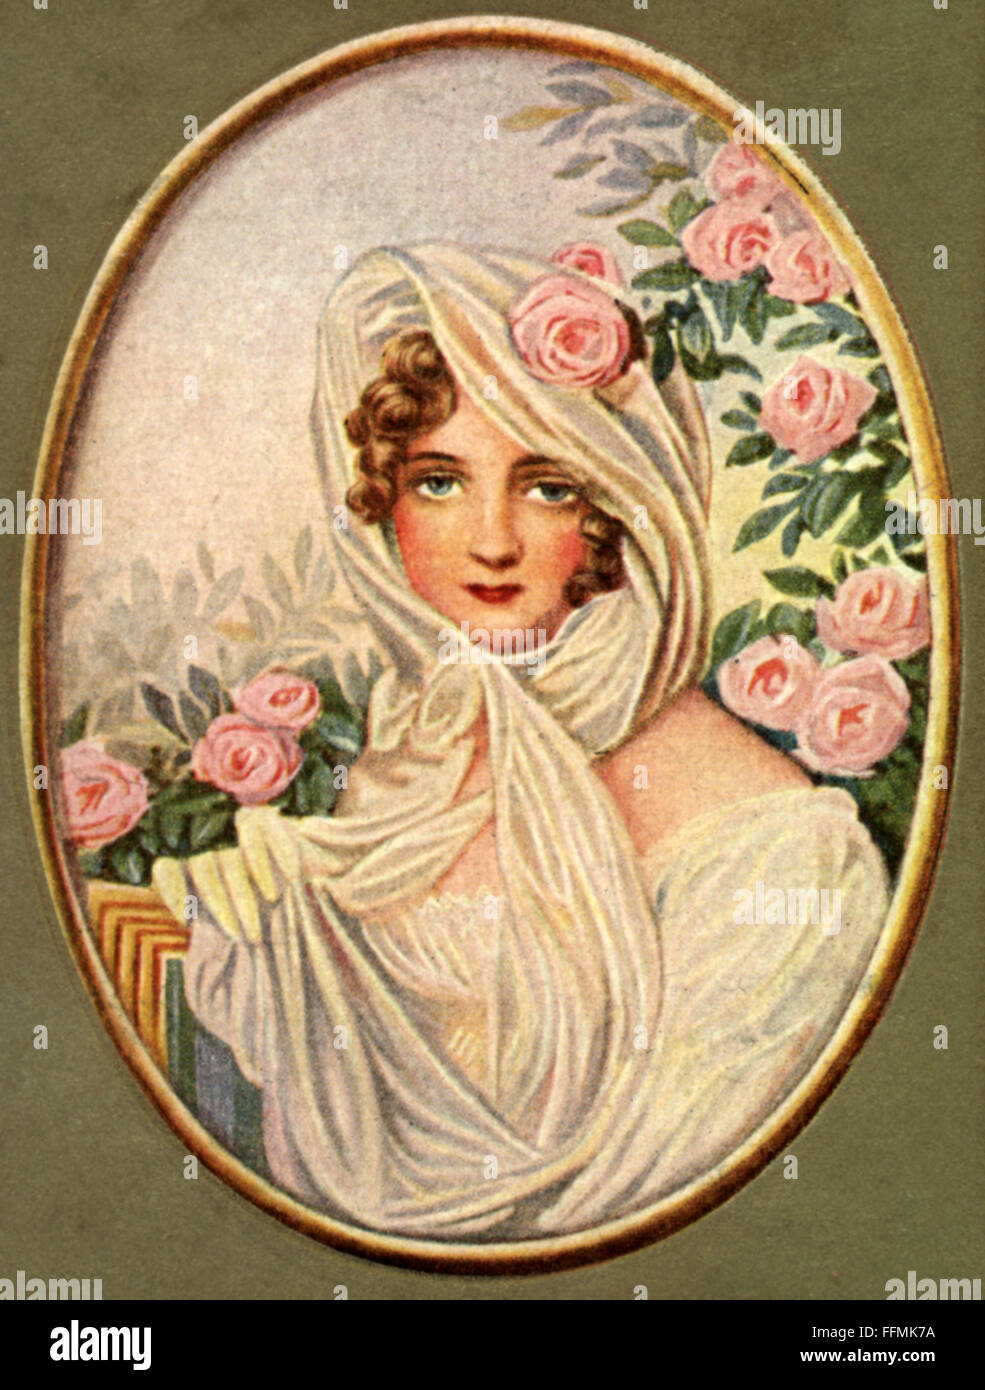 Bagration, Catherine Pavlovna, 1.2.1783 - 21.5.1857, portrait, print after miniature by Jean-Baptiste Isabey, 1812, cigarette card, Germany, 1933, Stock Photo